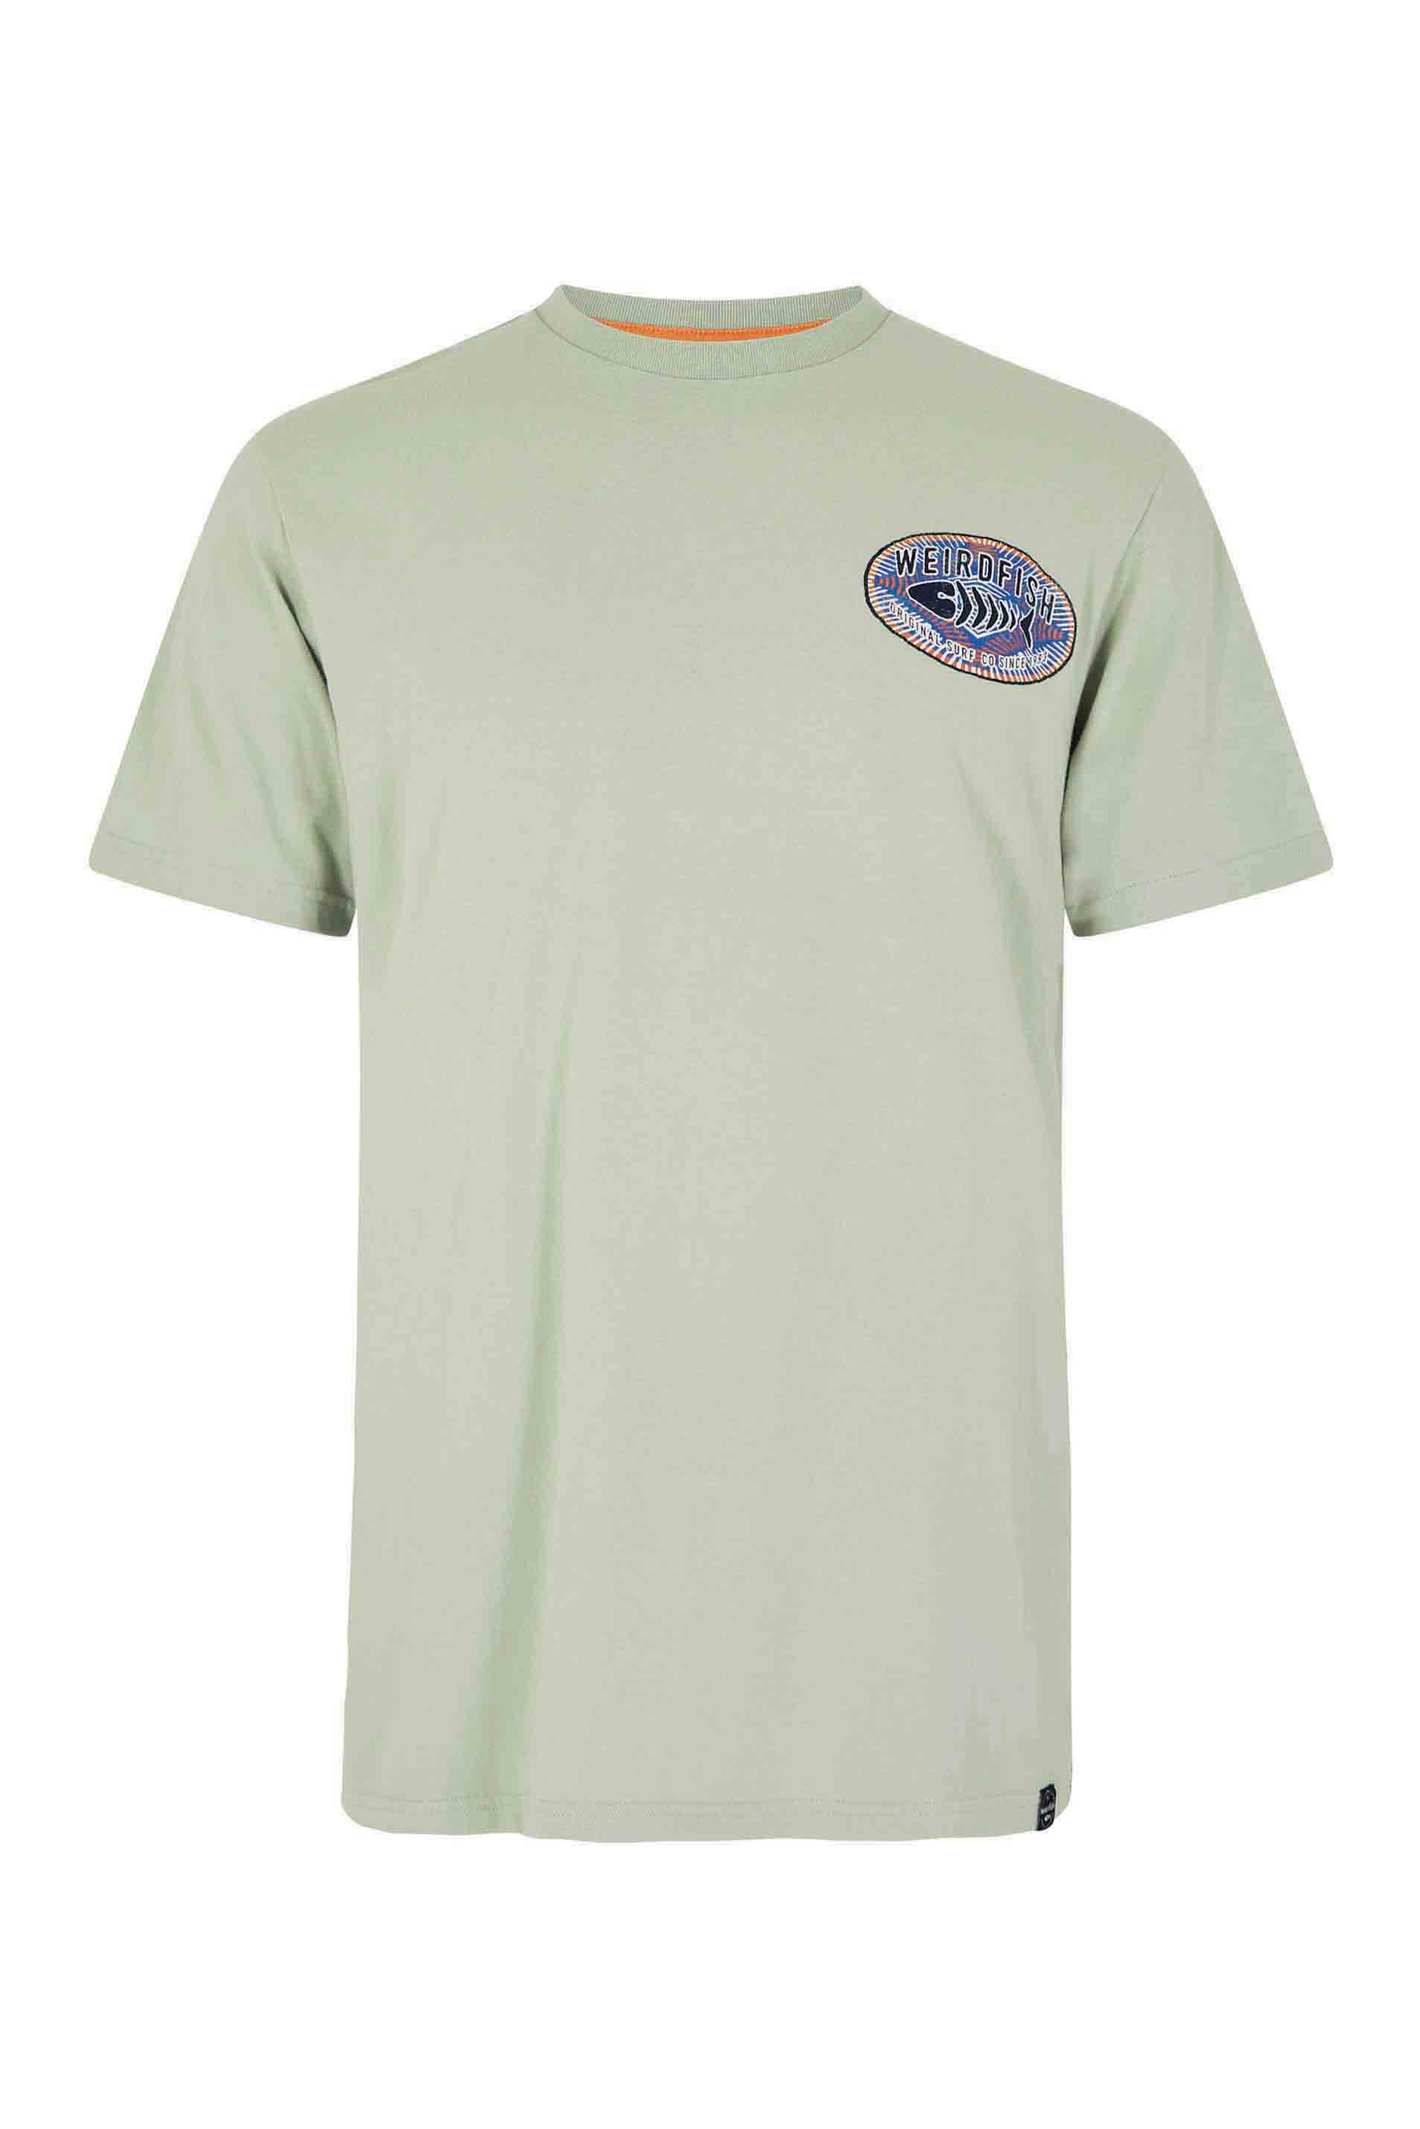 Weird Fish Original Surf Graphic T-Shirt Pistachio Size 4XL